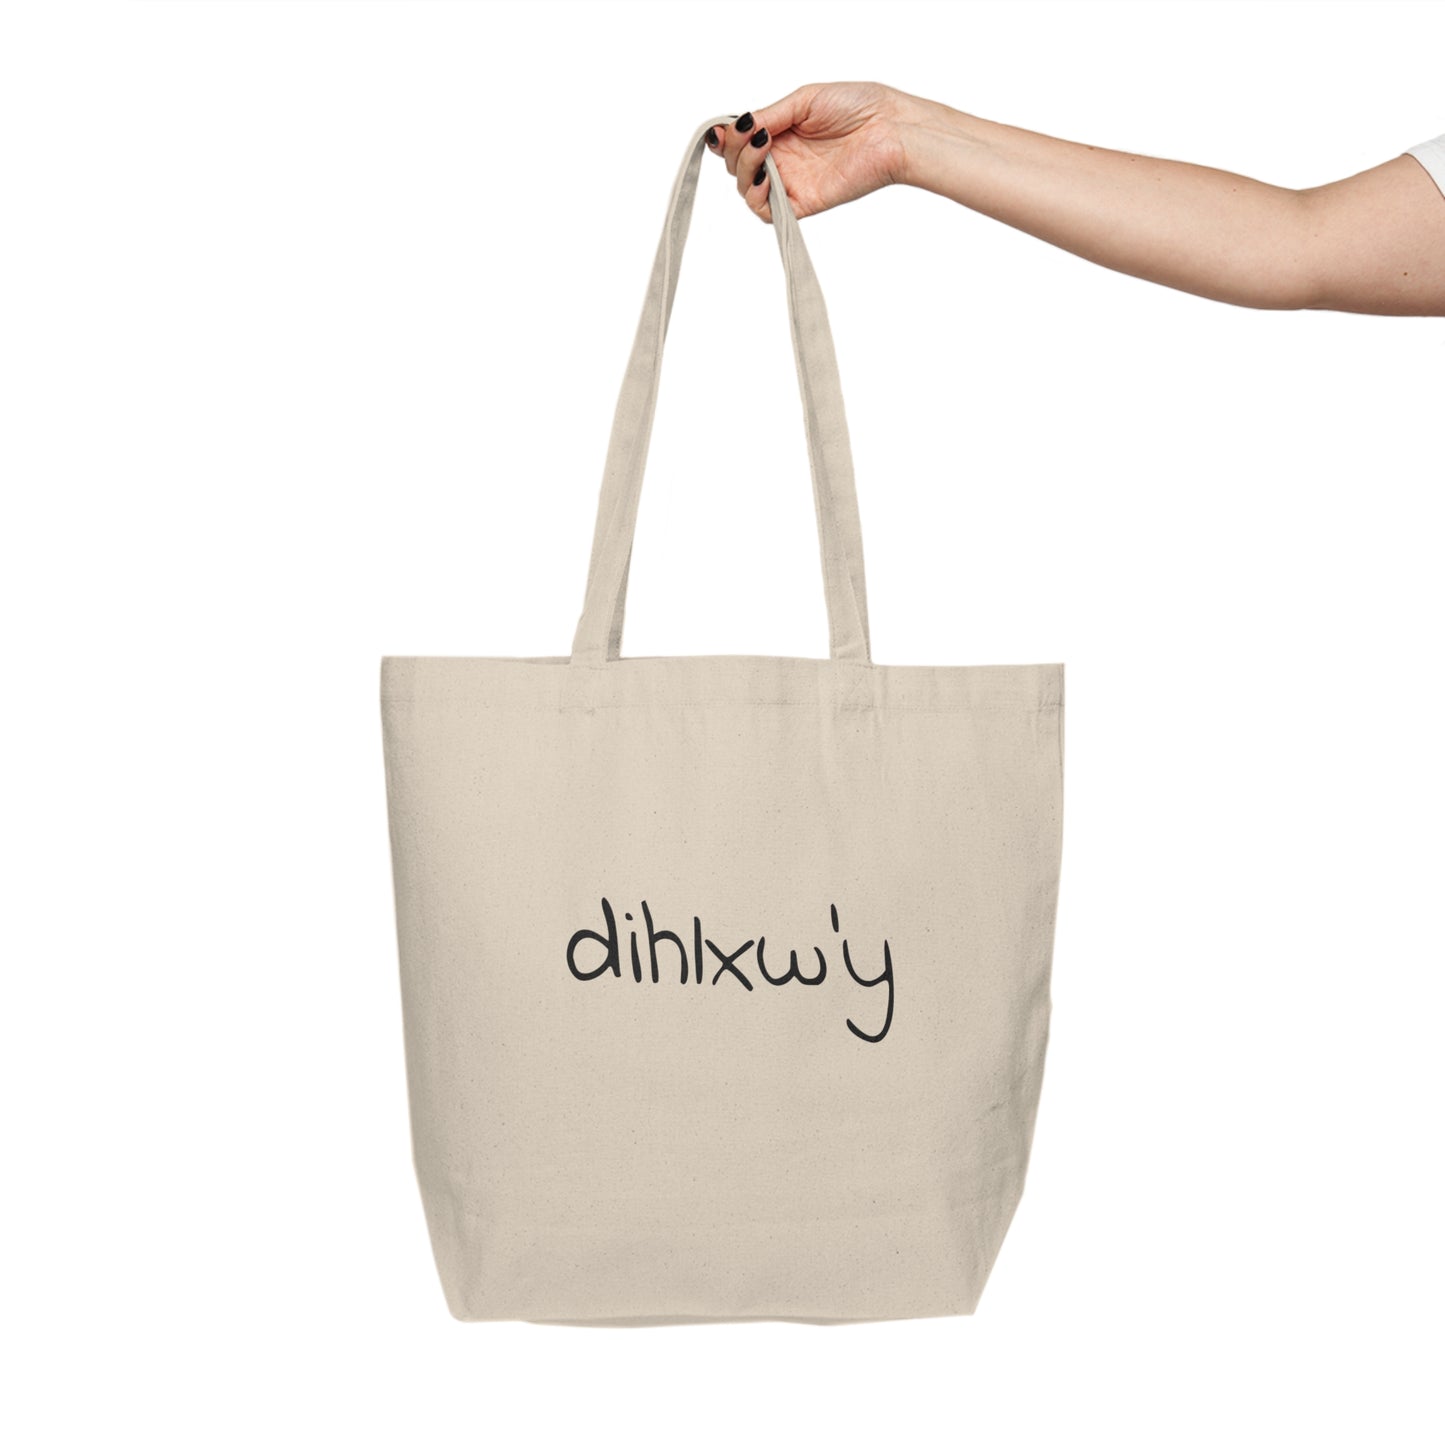 DIHLXW'Y - MY BAG, Canvas Shopping Tote